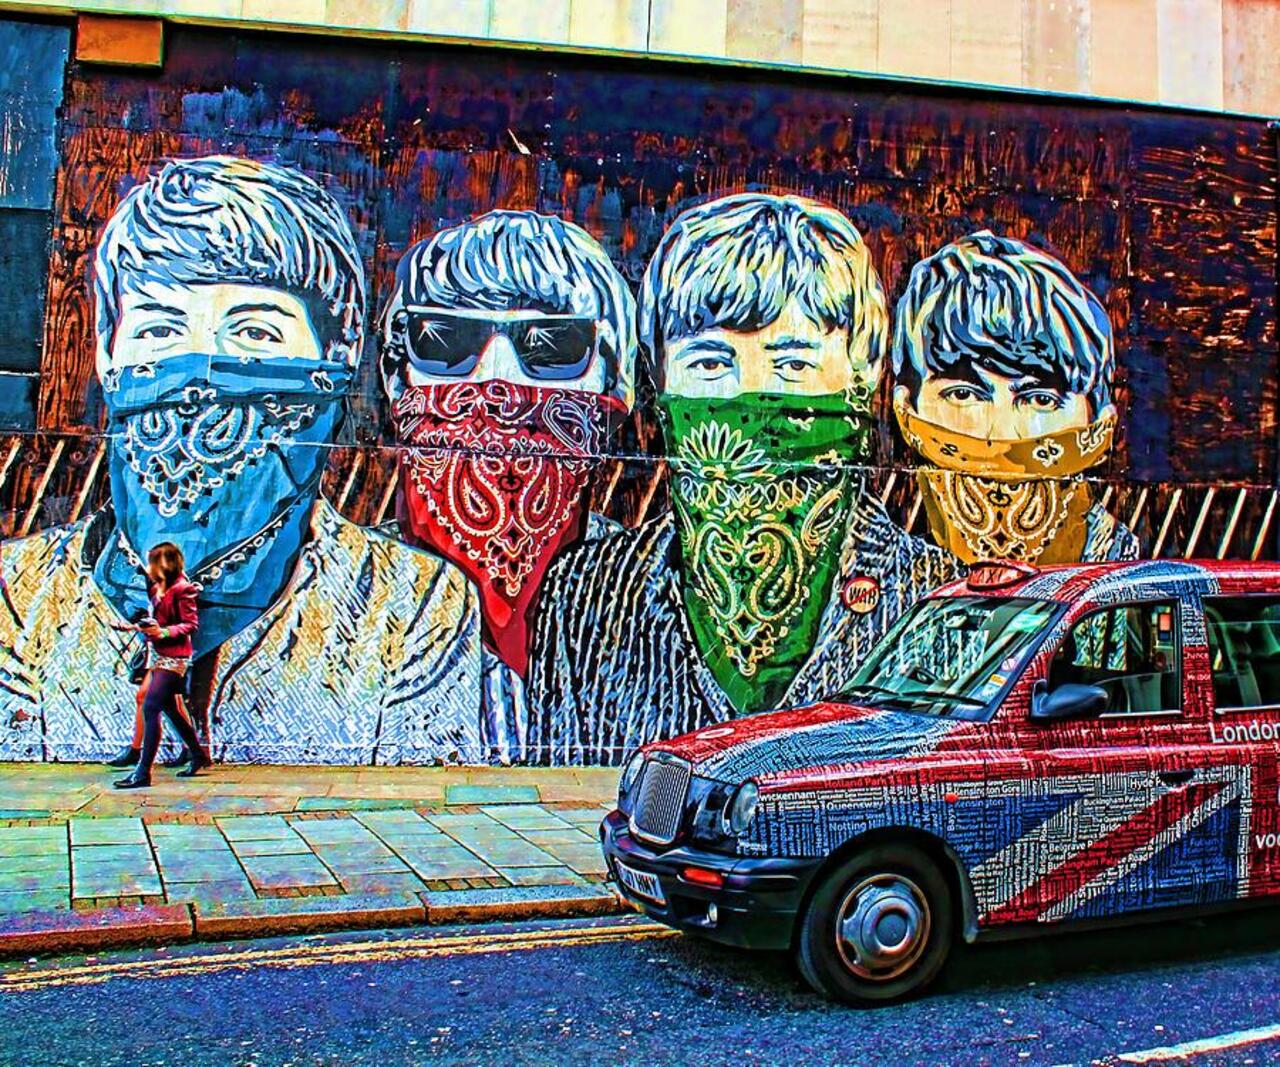 #Streetart #urbanart #graffiti #mural "The Beatles" by #artist Mr.Brainwsh, London 2012. 
Photographer Jasna Buncic http://t.co/GpJSzUrvib